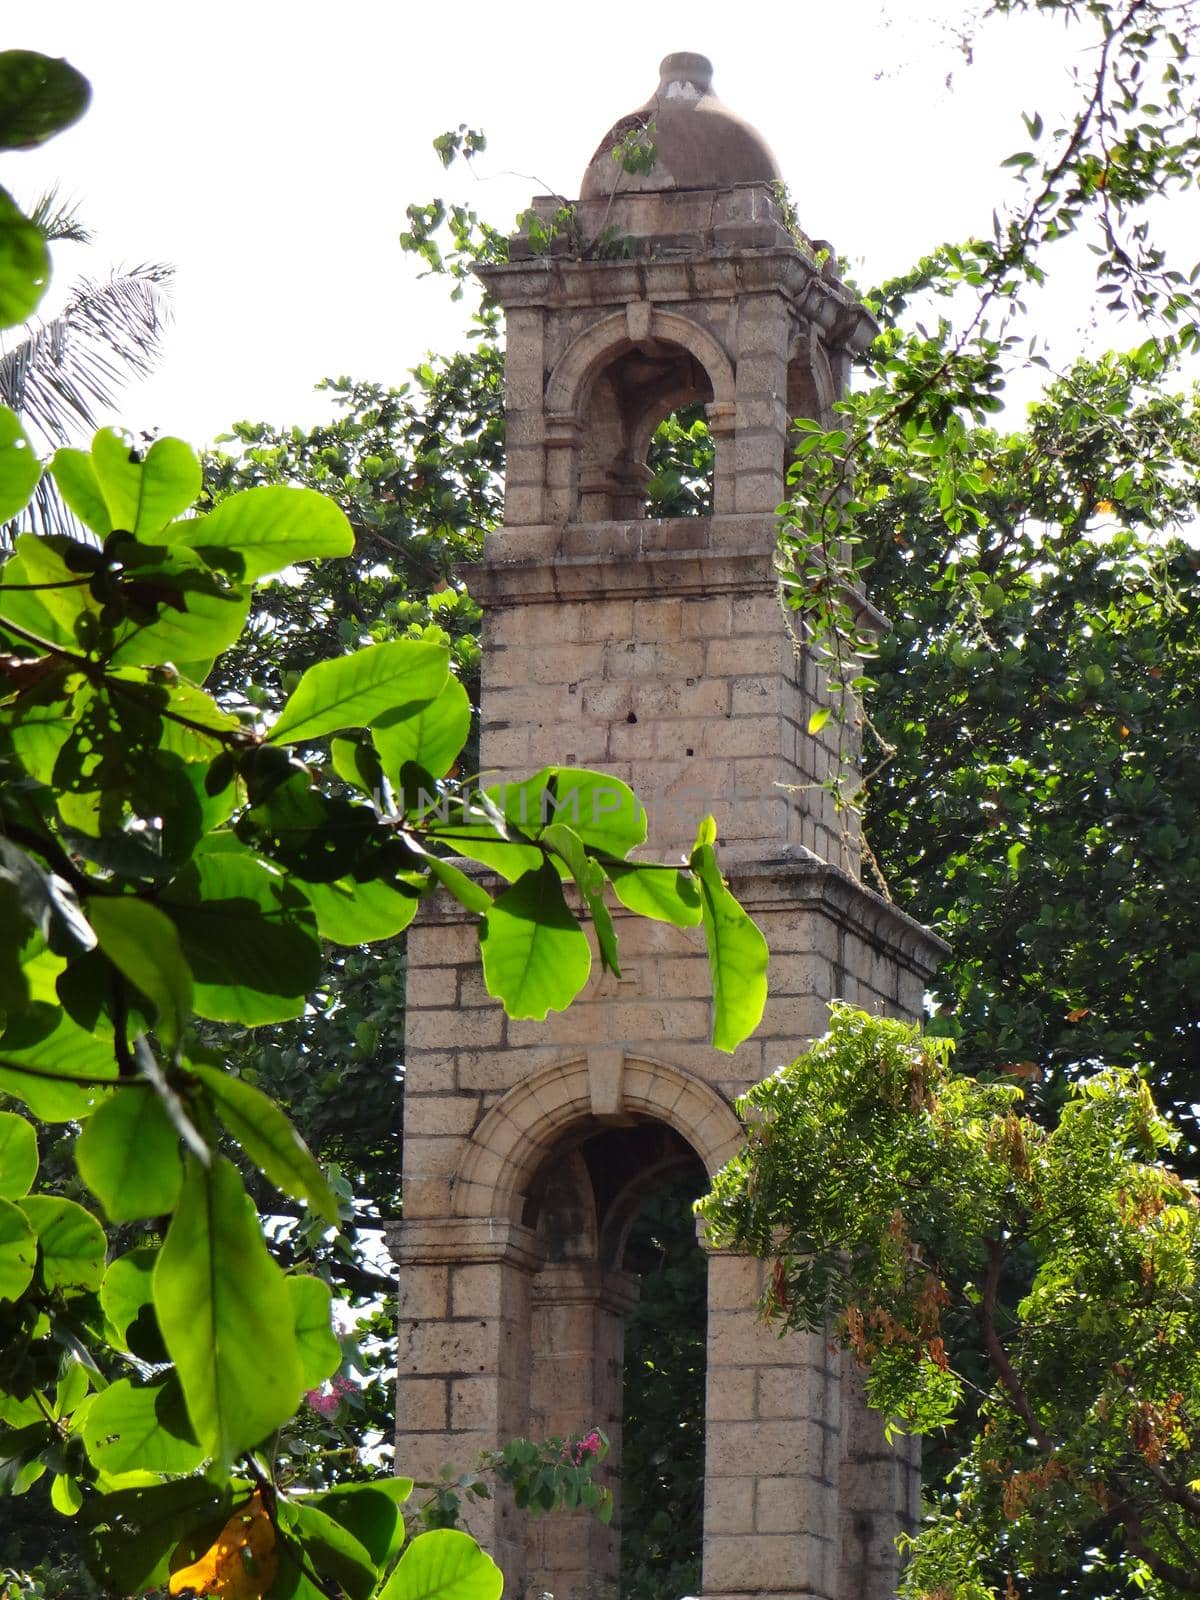 Tower of the abandoned Negombo fort, Sri Lanka.